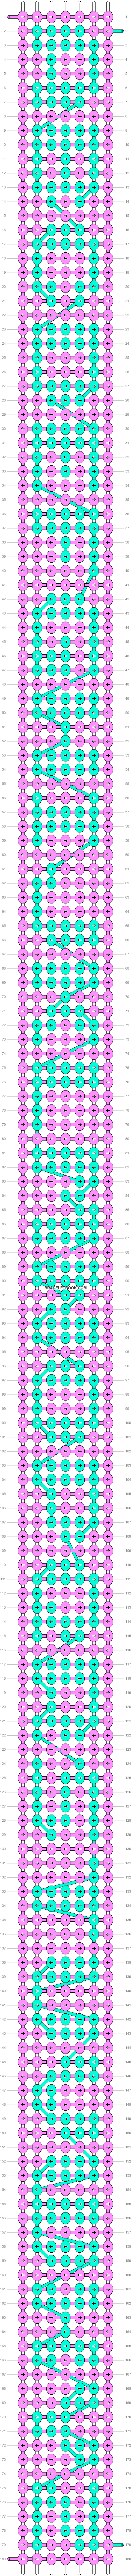 Alpha pattern #44226 variation #68267 pattern